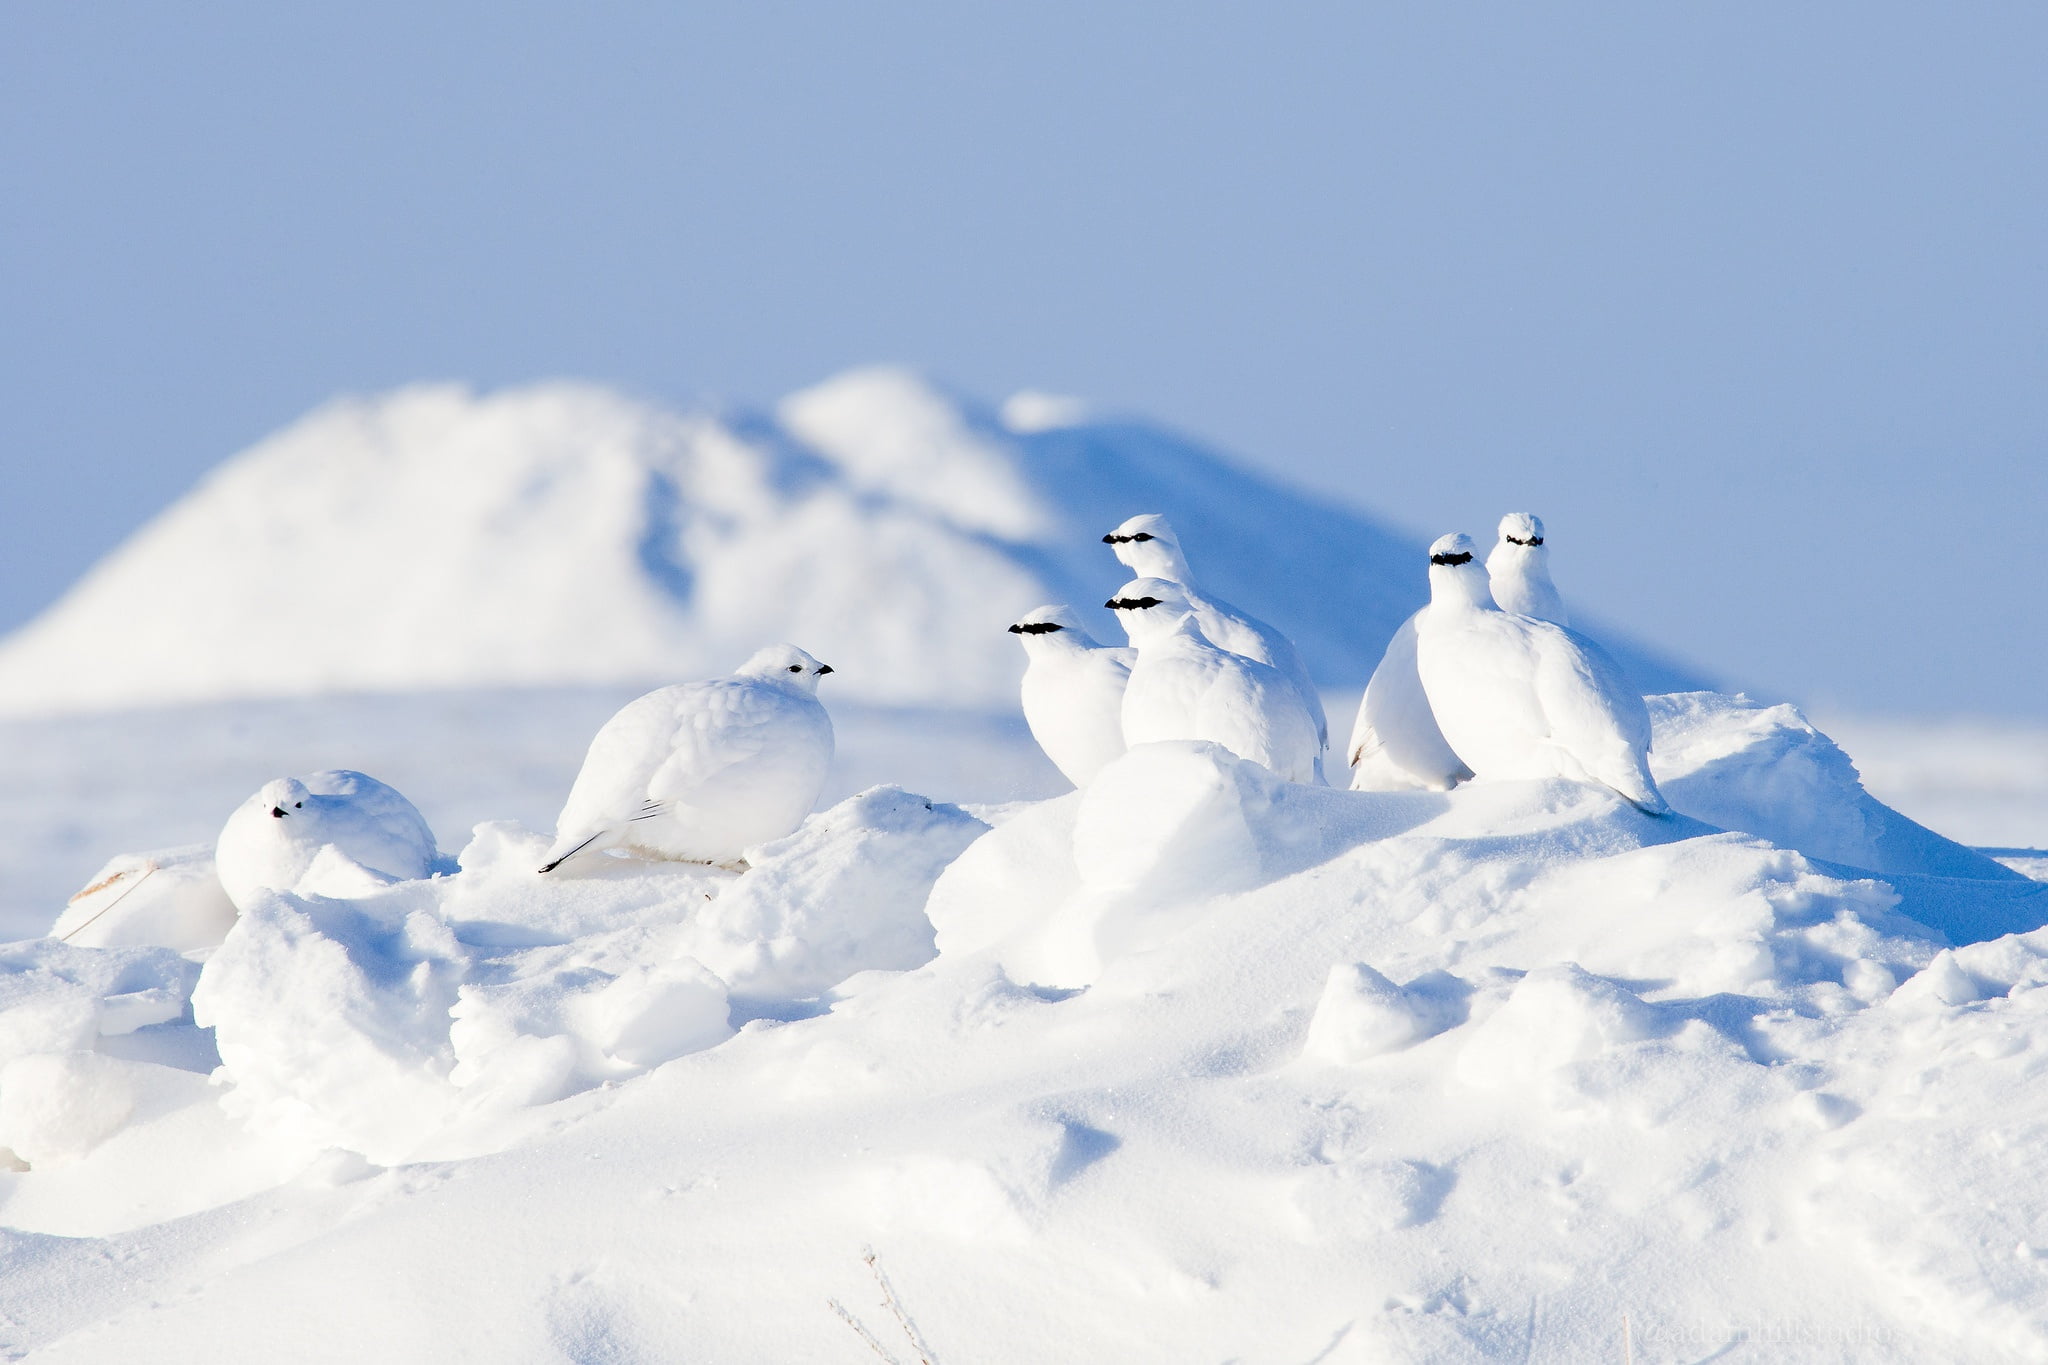 flock of white birds, snow, winter, animals, cold temperature